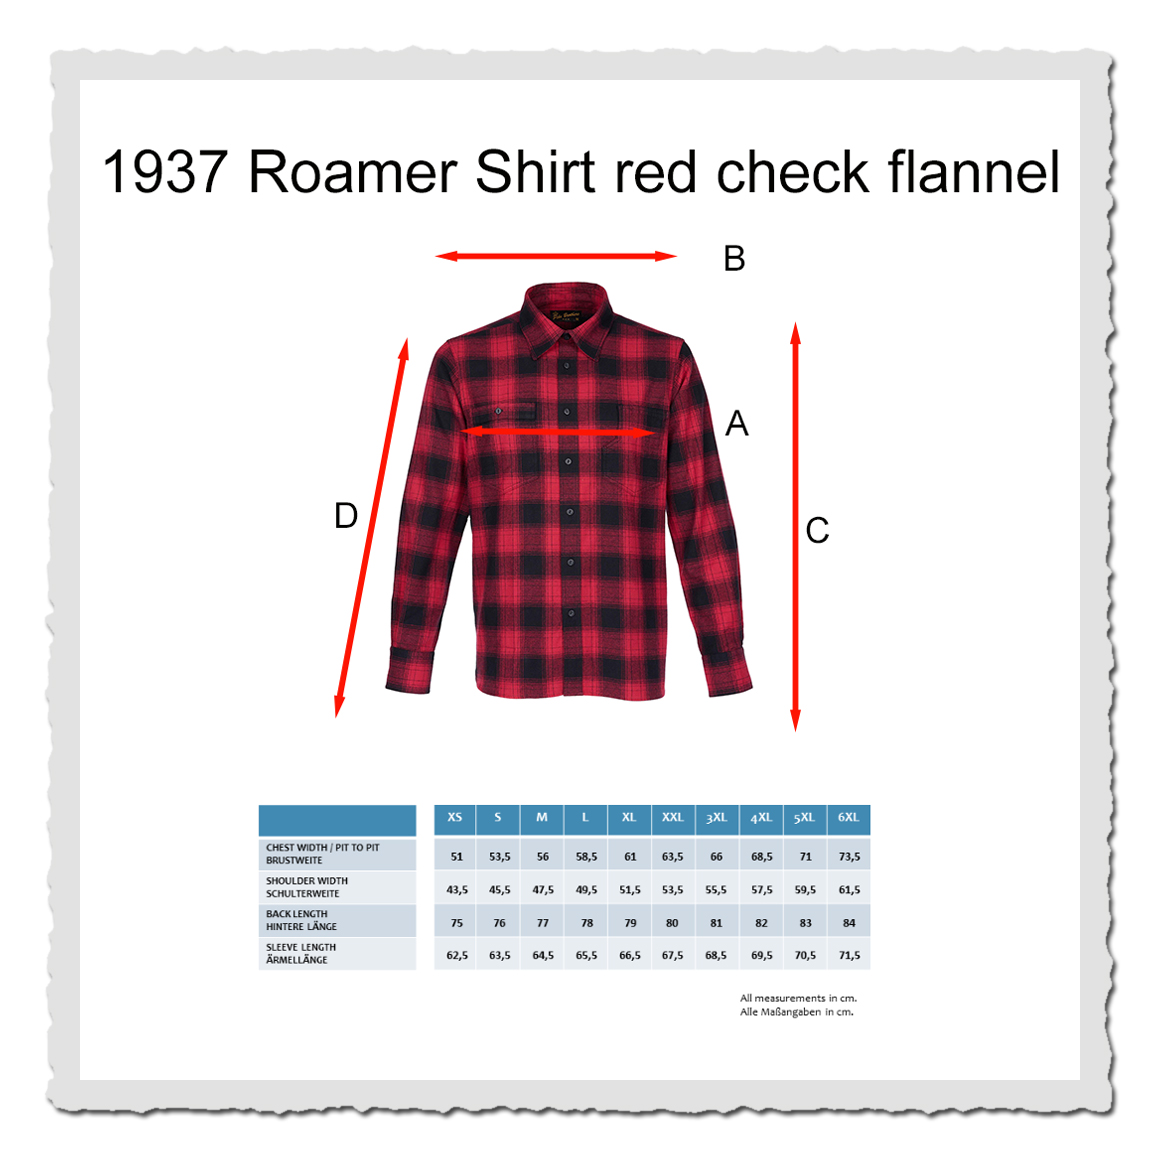 1937 Roamer Shirt red check